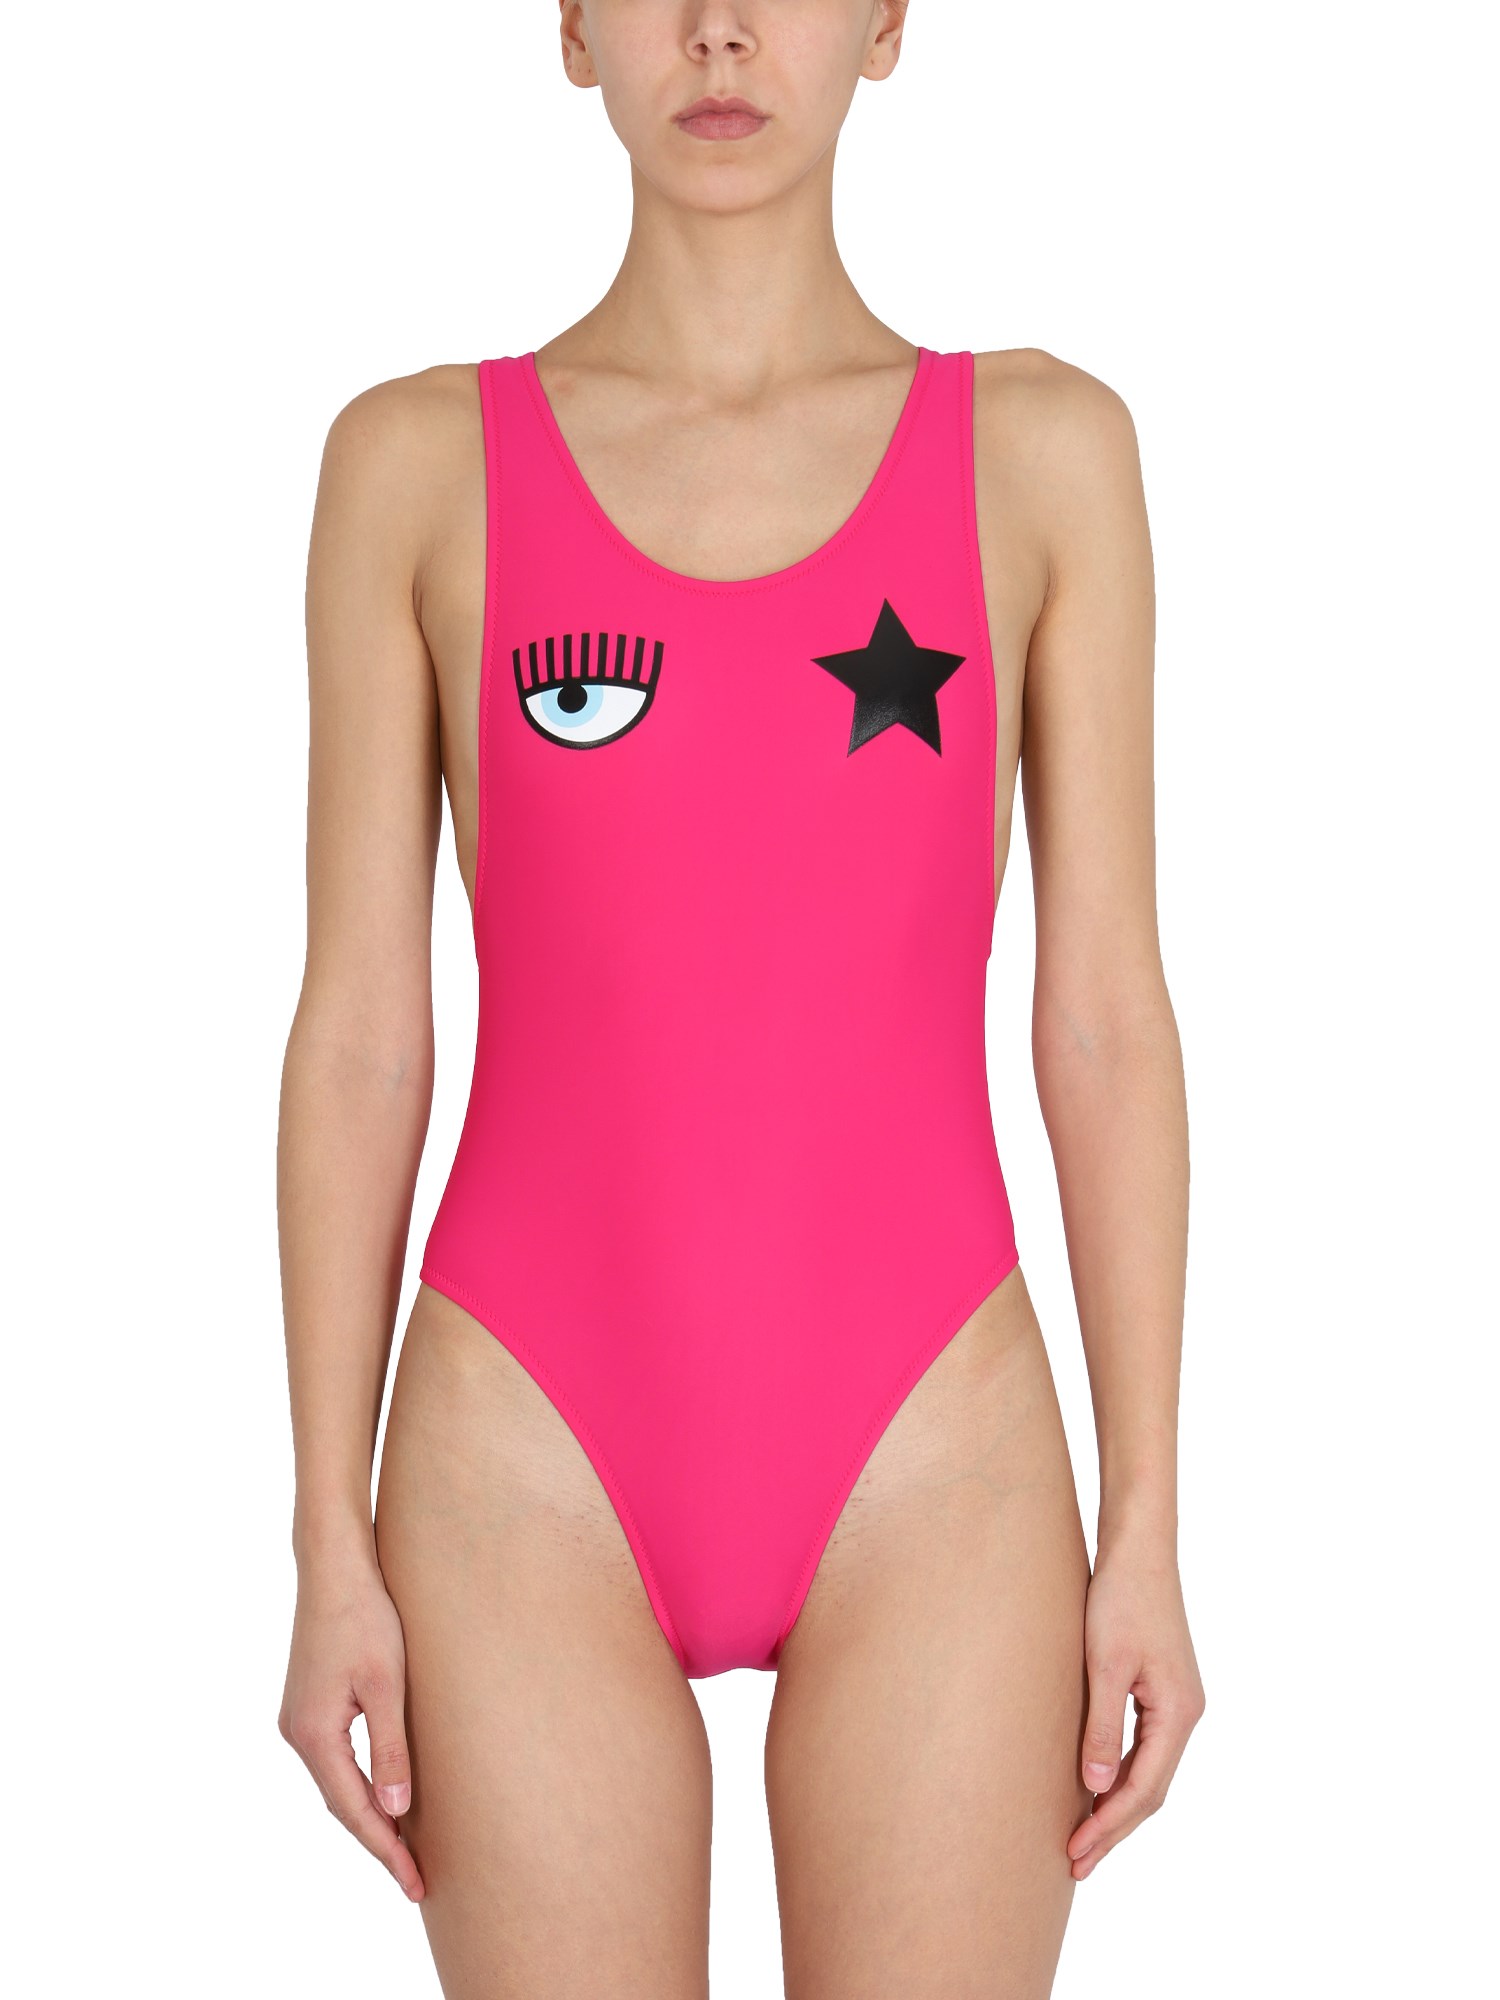 chiara ferragni costume intero bikini "eye star"